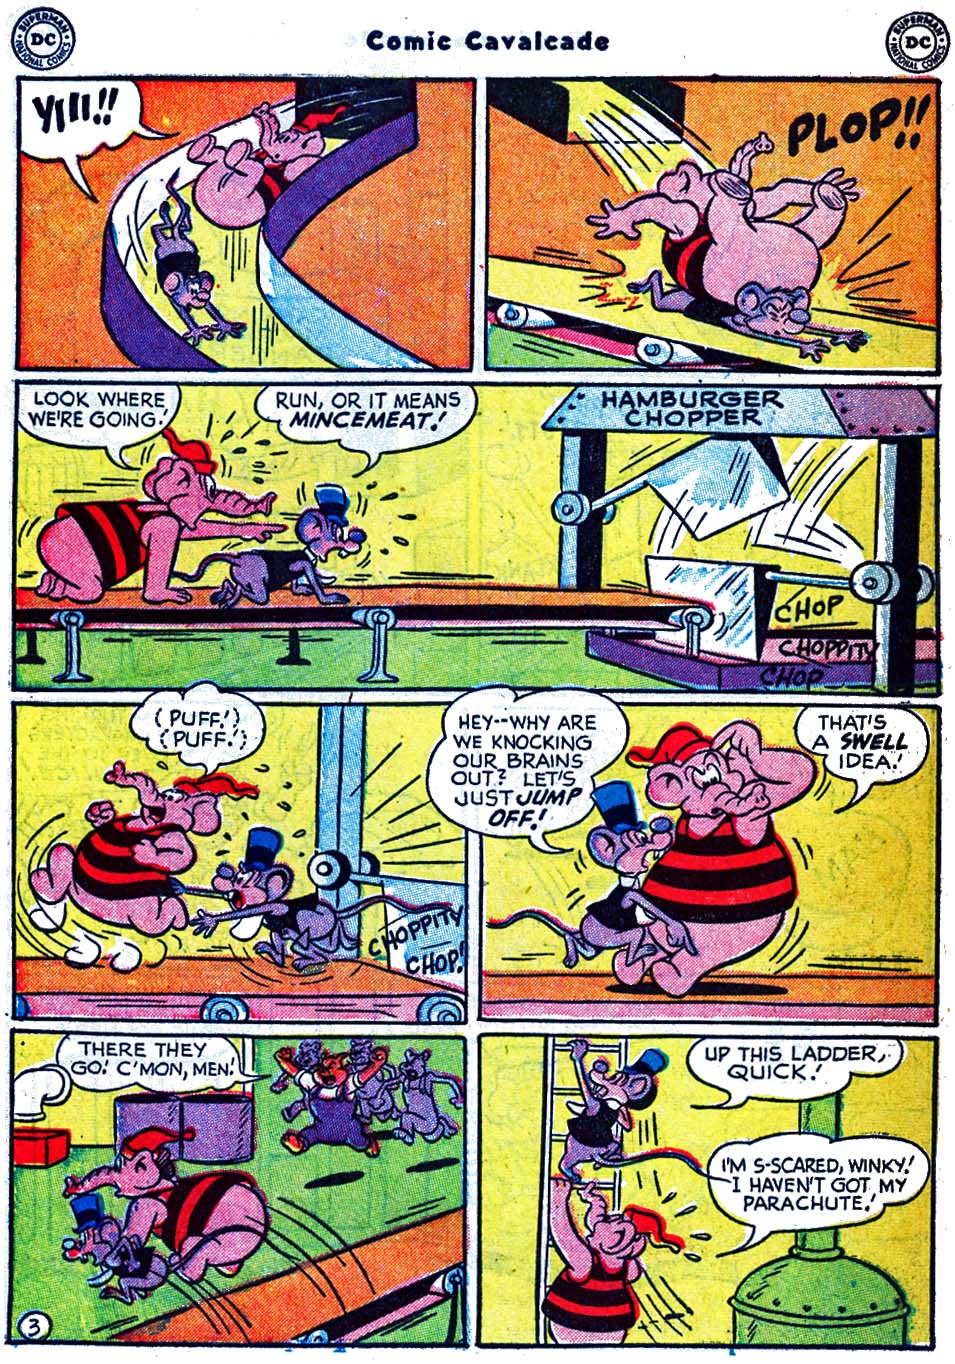 Comic Cavalcade issue 53 - Page 51